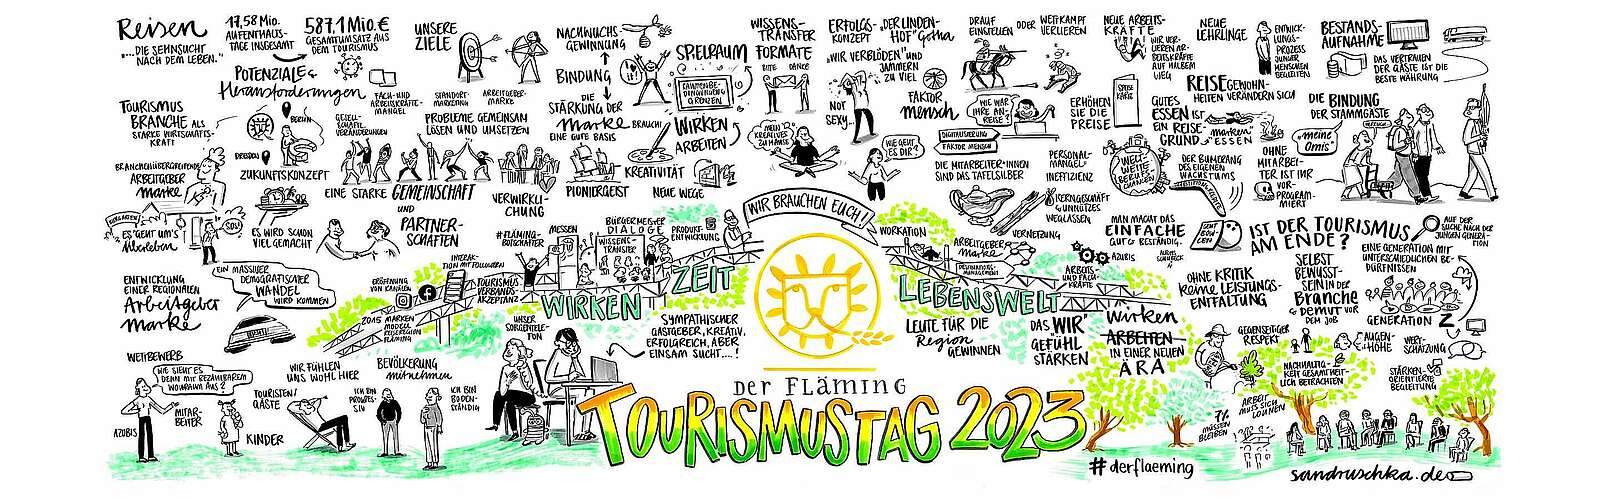 Graphic Recording Tourismustag Fläming 2023,
        
    

        Foto: Tourismusverband Fläming e.V./Kein Urheber bekannt